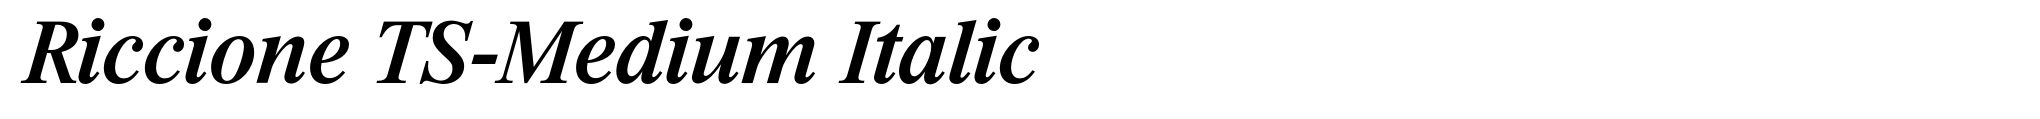 Riccione TS-Medium Italic image